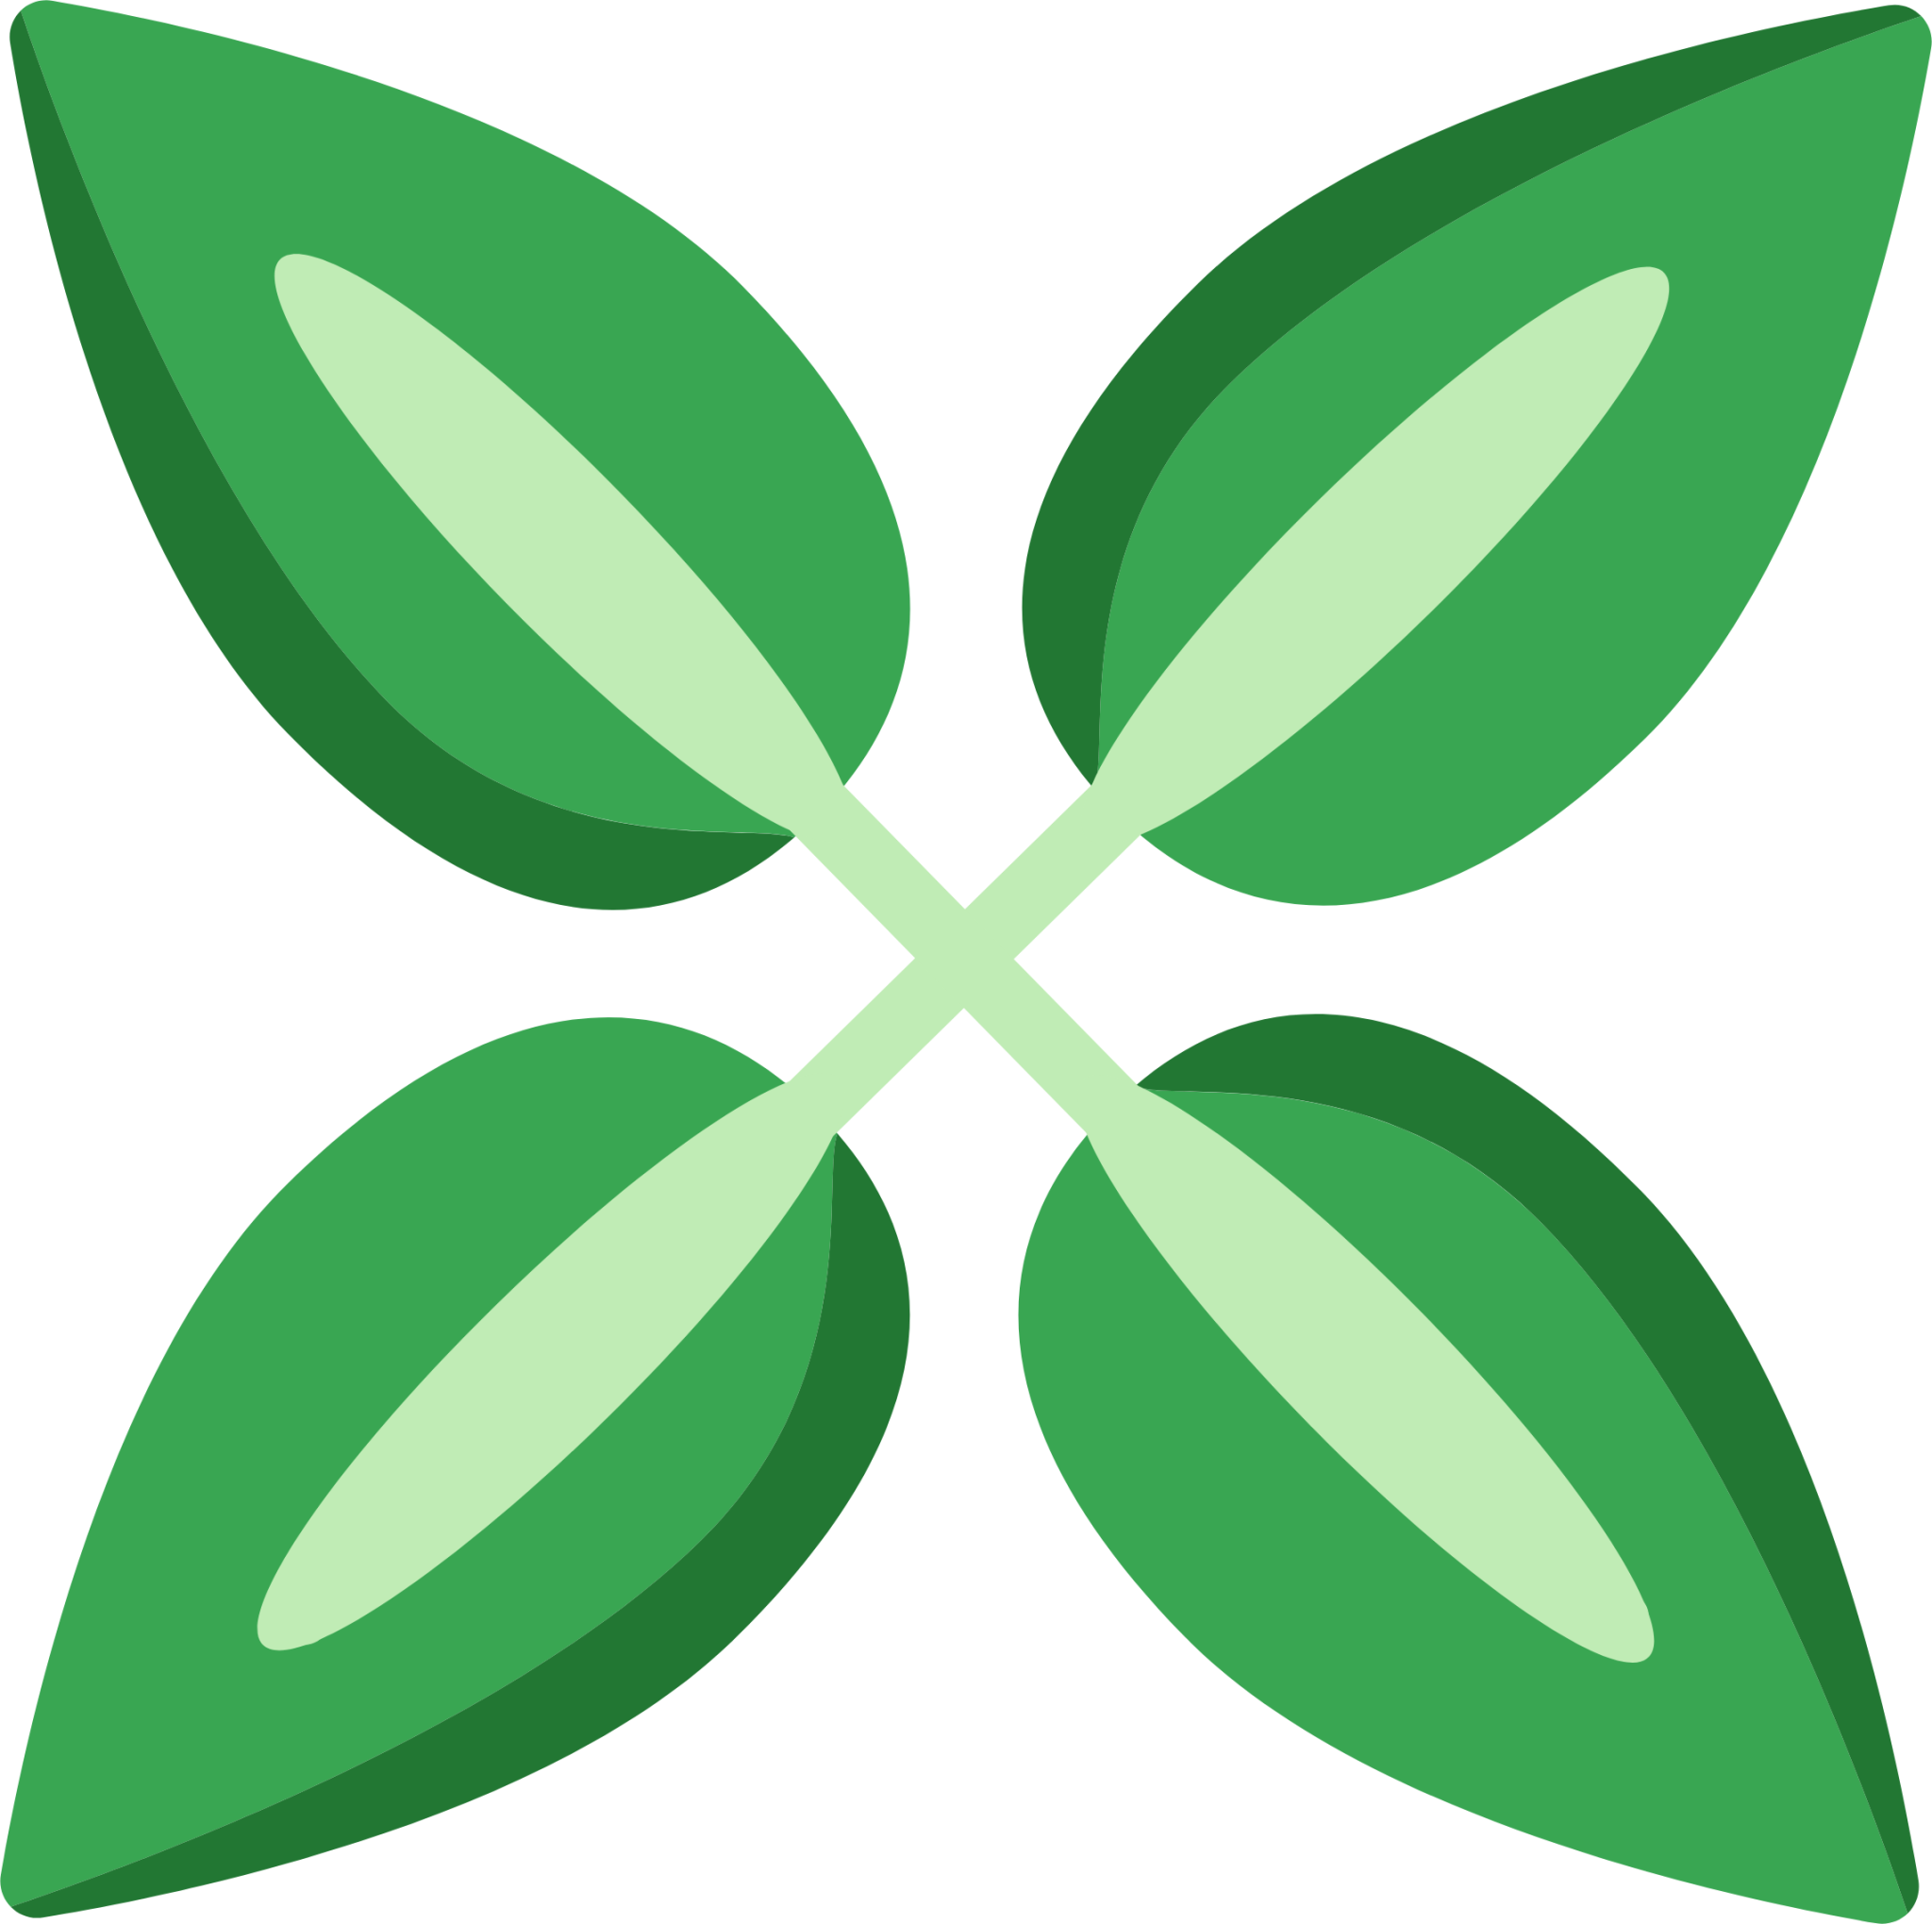 cross seed icon